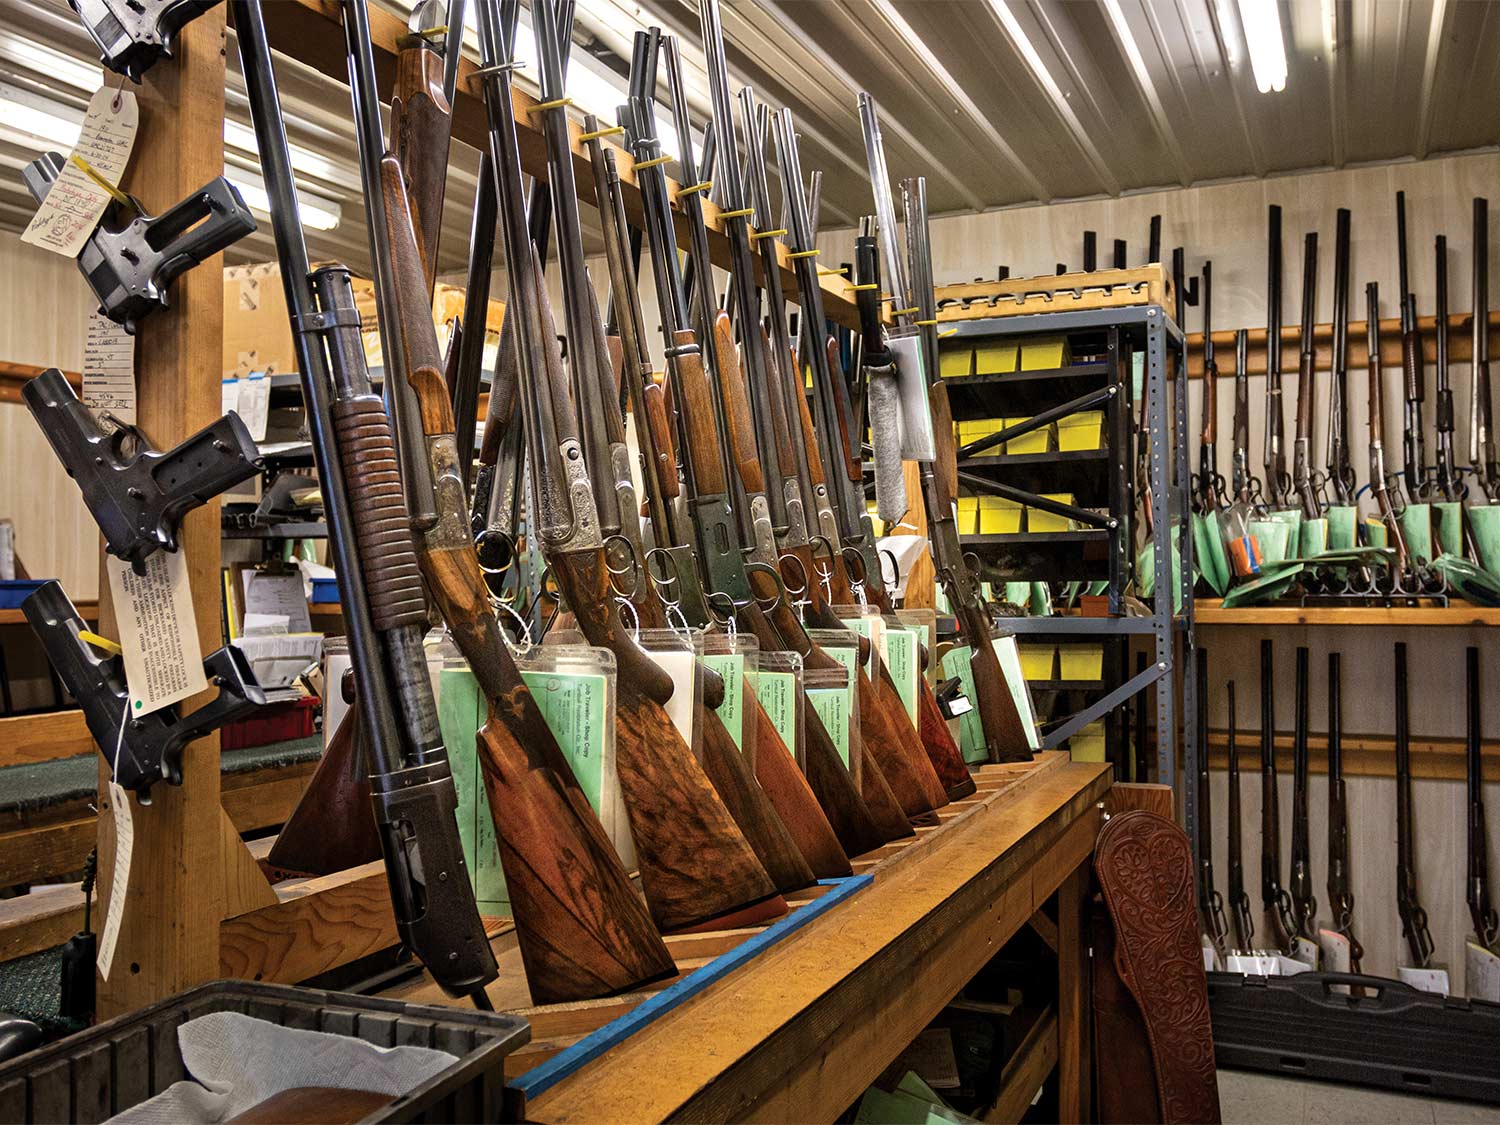 guns stored in a store-room on racks